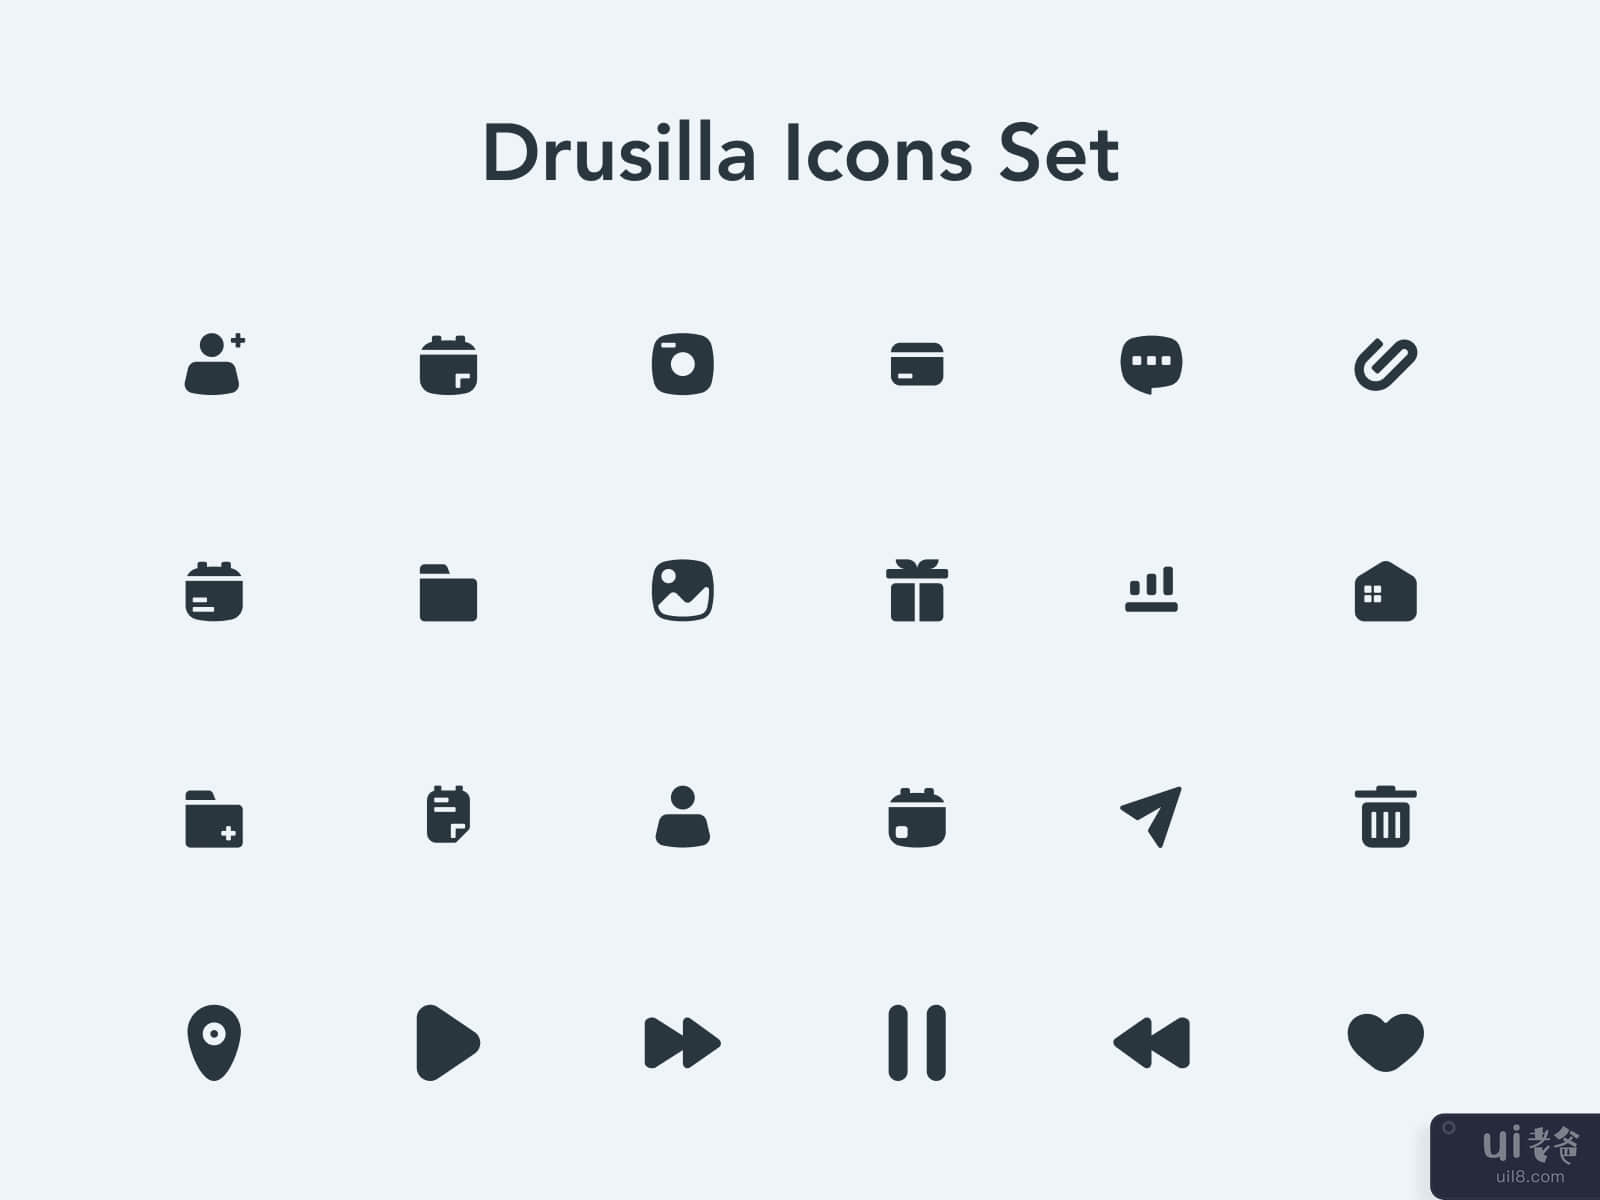 Drusilla Icons Set